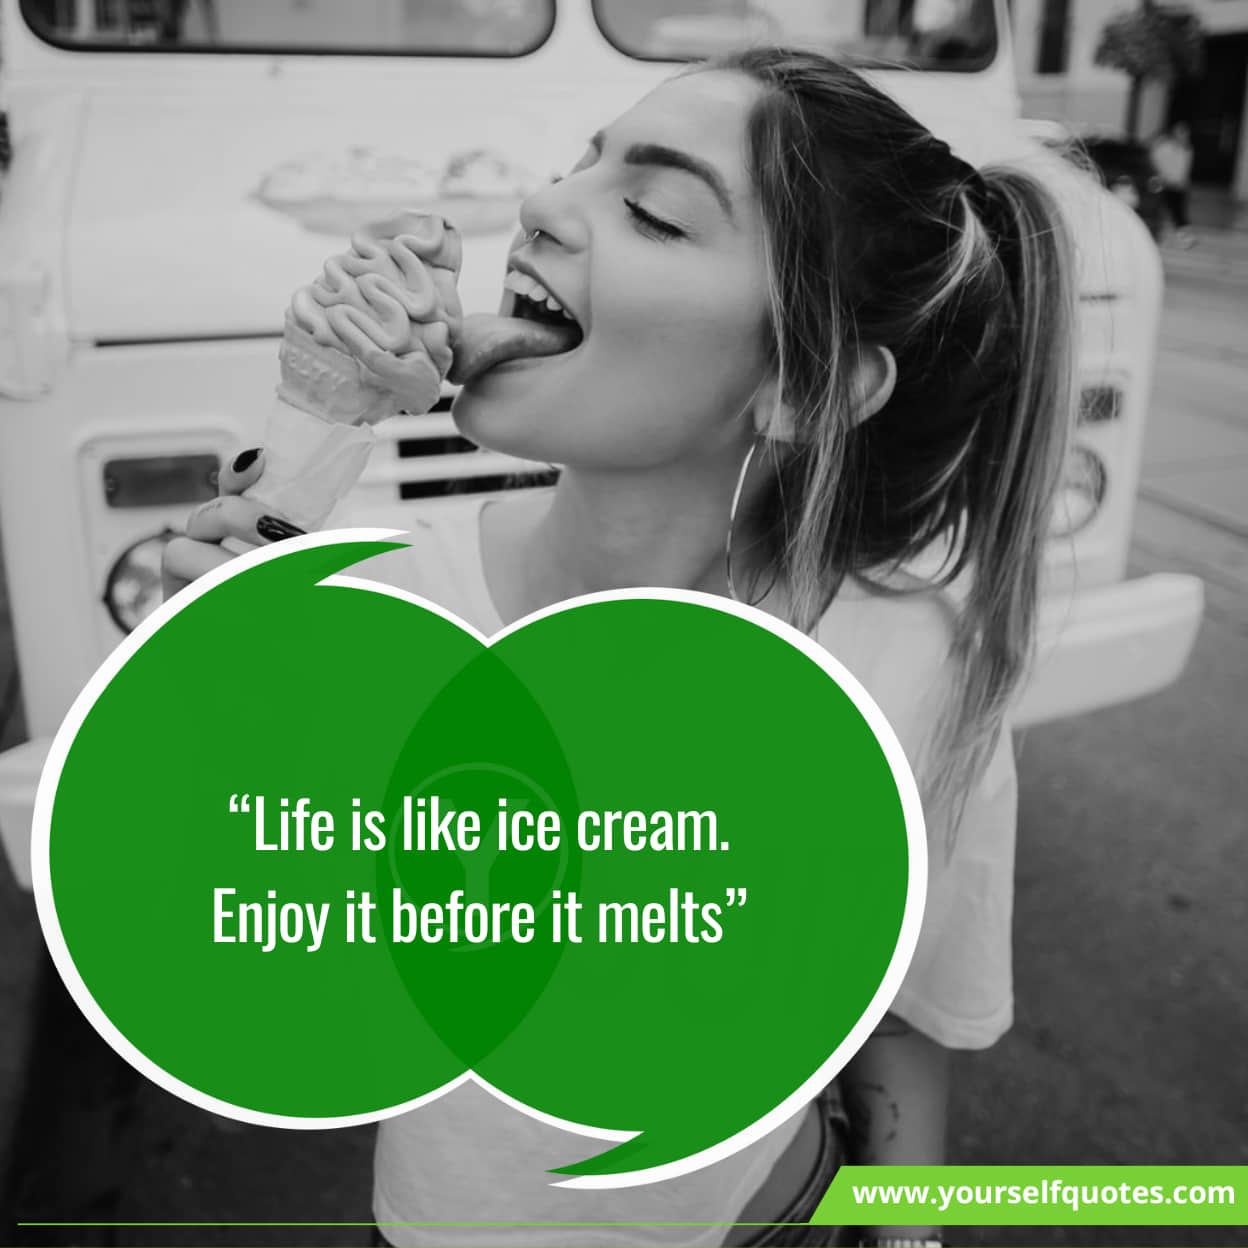 Inspiring Quotes To Enjoy Life